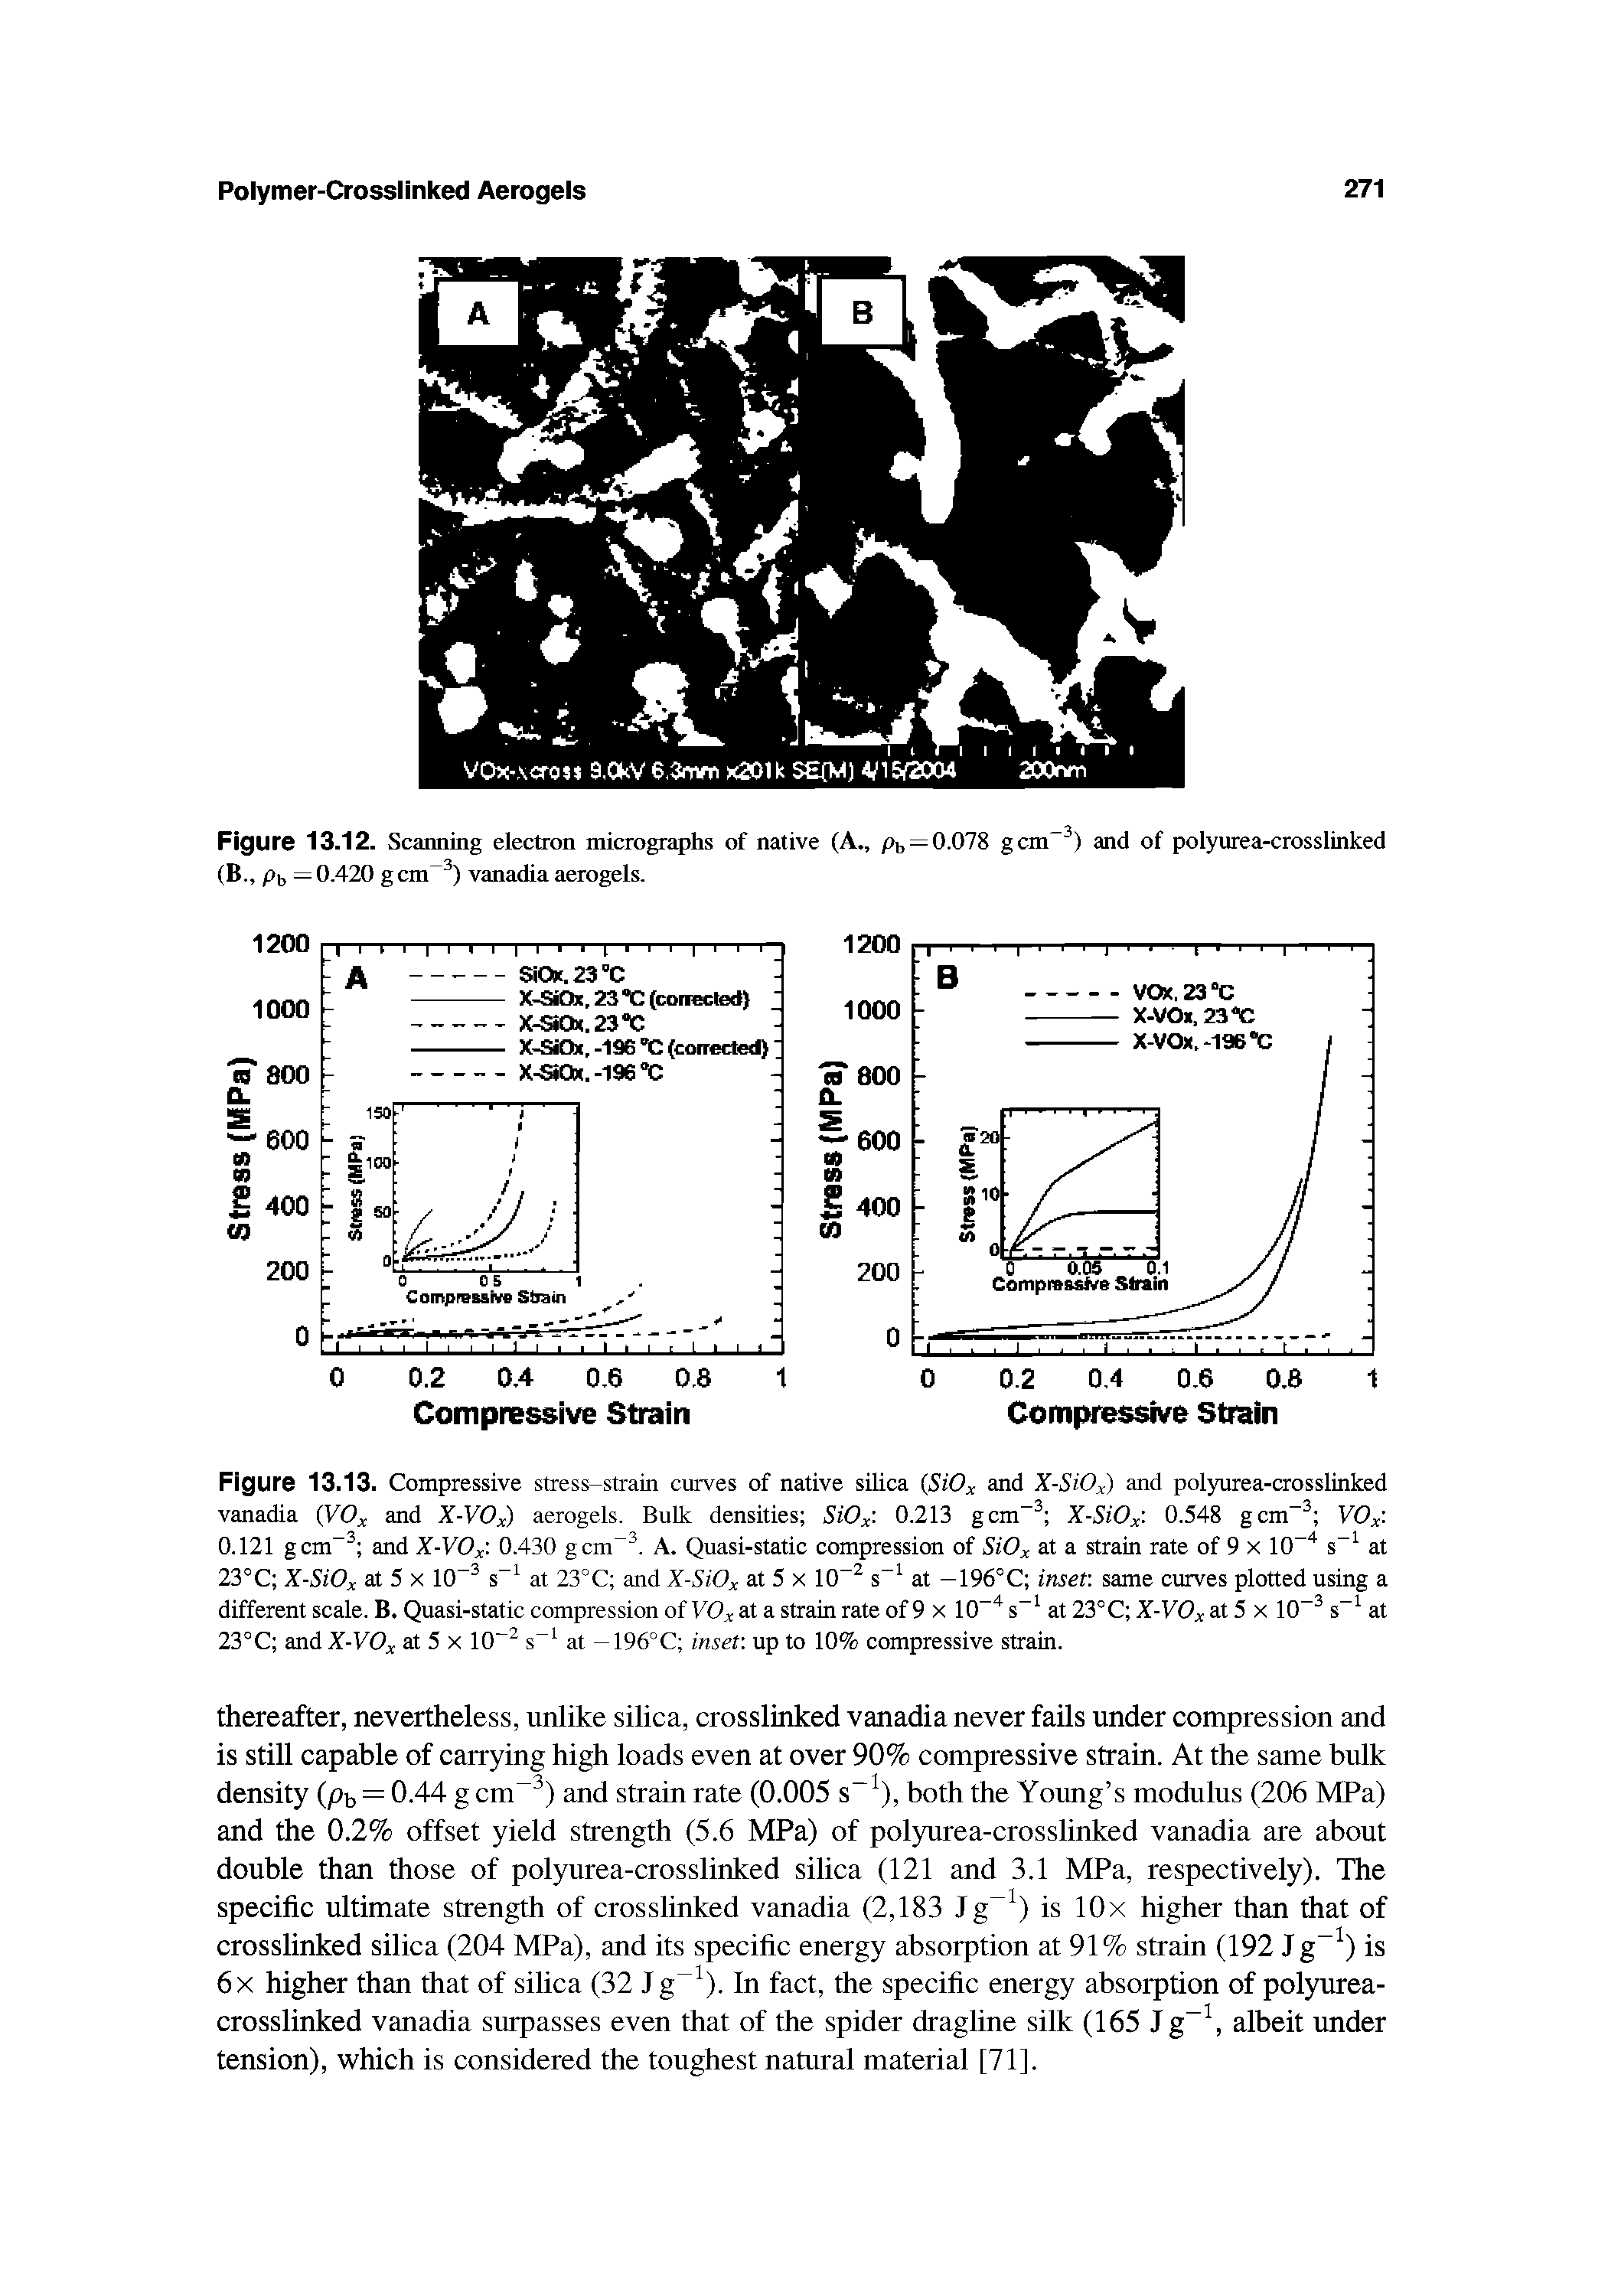 Figure 13.12. Scanning electron micrographs of native (A., (B., Pb = 0.420 g cm ) vanadia aerogels.